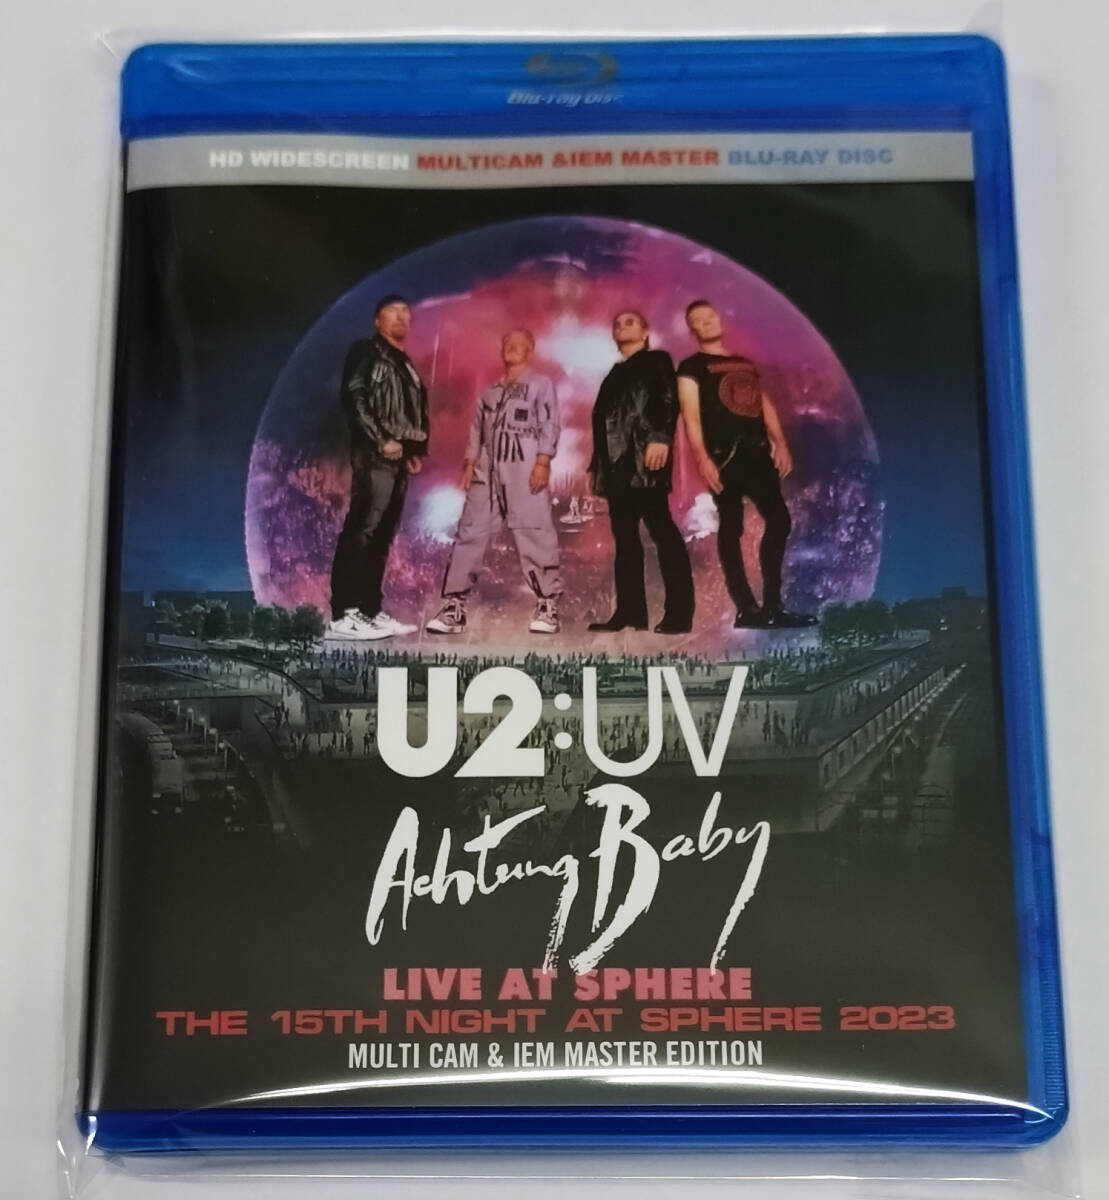 U2 / U2:UV ACHTUNG BABY - THE 15TH NIGHT AT SPHERE 2023 : MULTI CAM & IEM MASTER EDITION (BDR)  の画像1